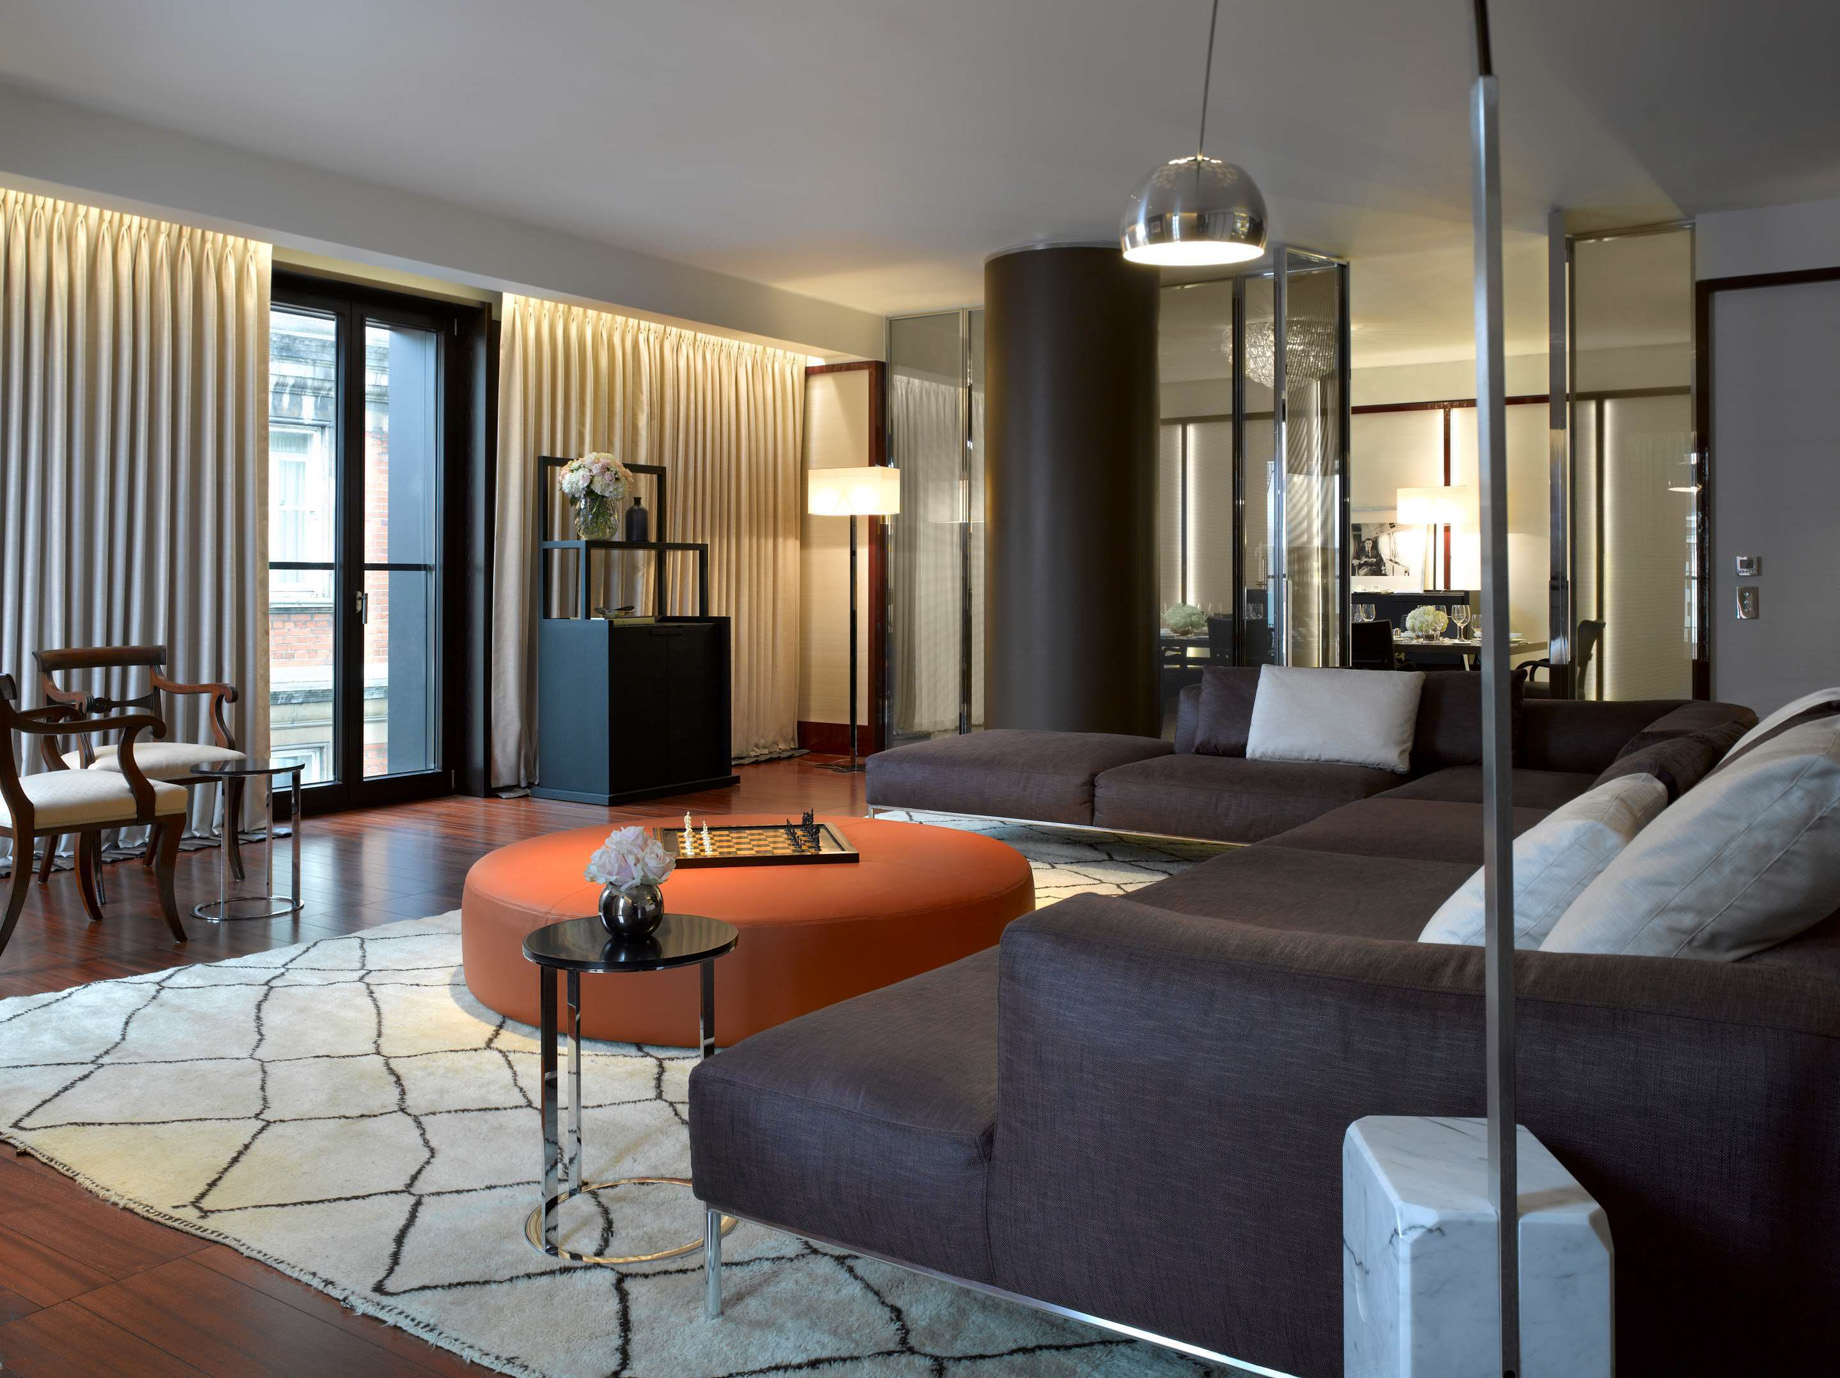 Bvlgari Hotel London - Knightsbridge, London, UK - Guest Suite Living Room